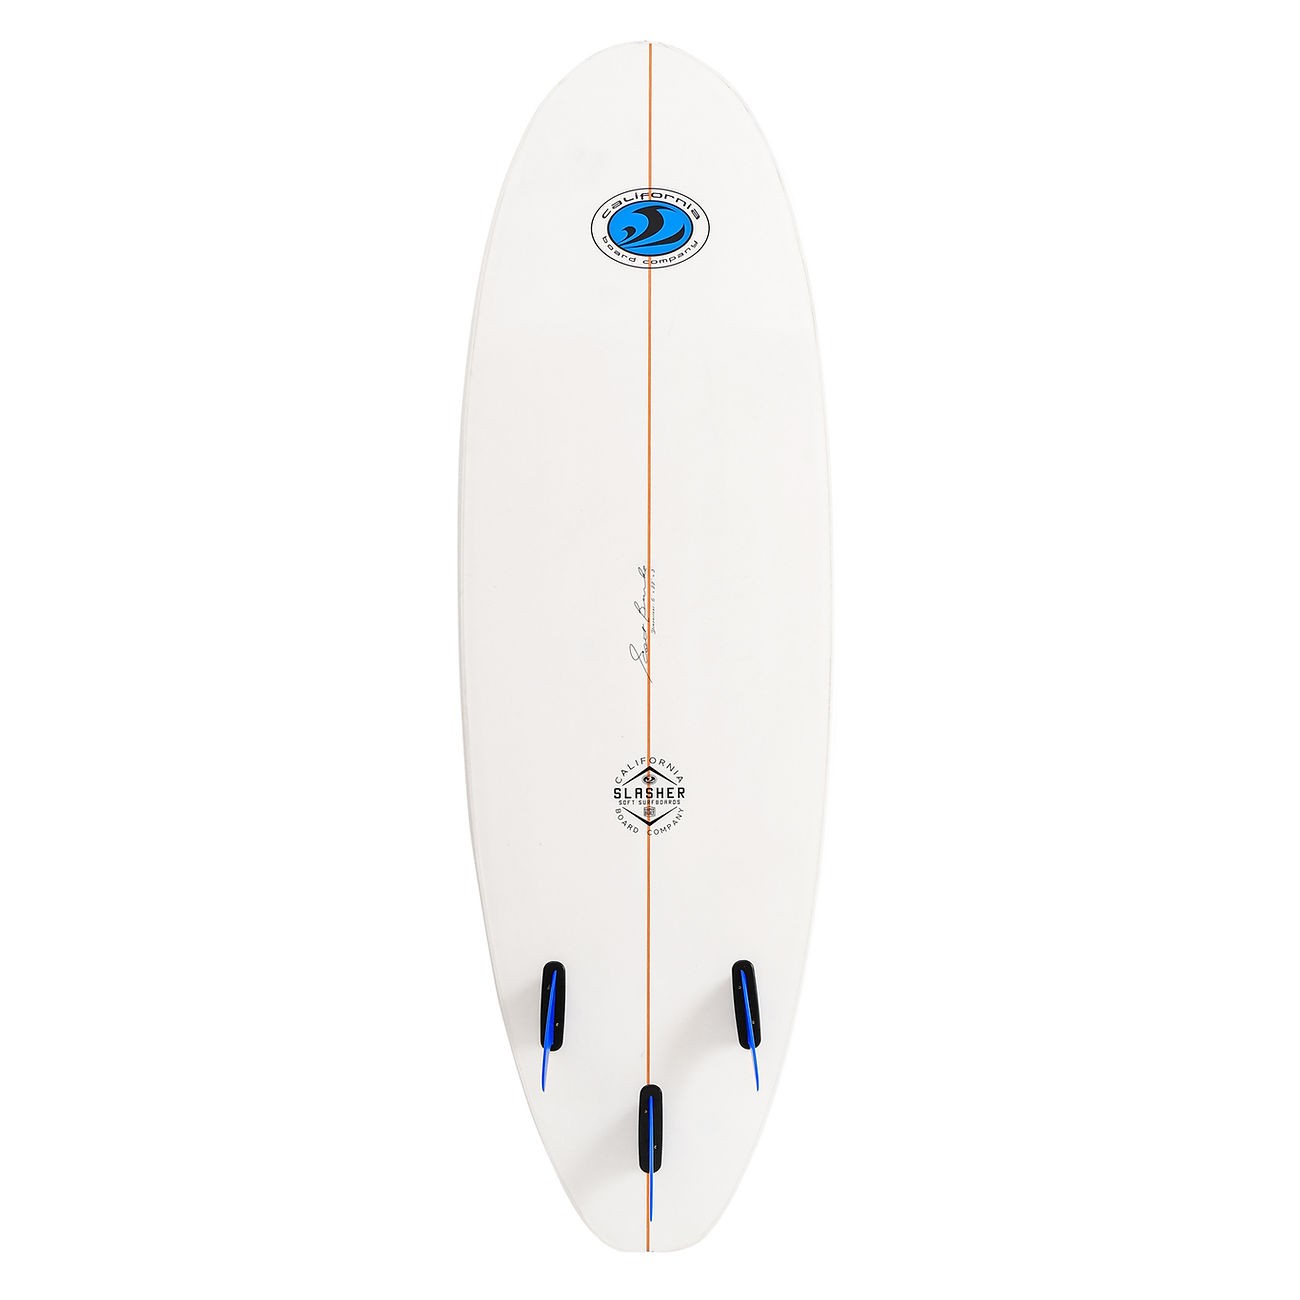 CBC - Tabla de surf de espuma - Softboard Slasher 6'0 - Blanco